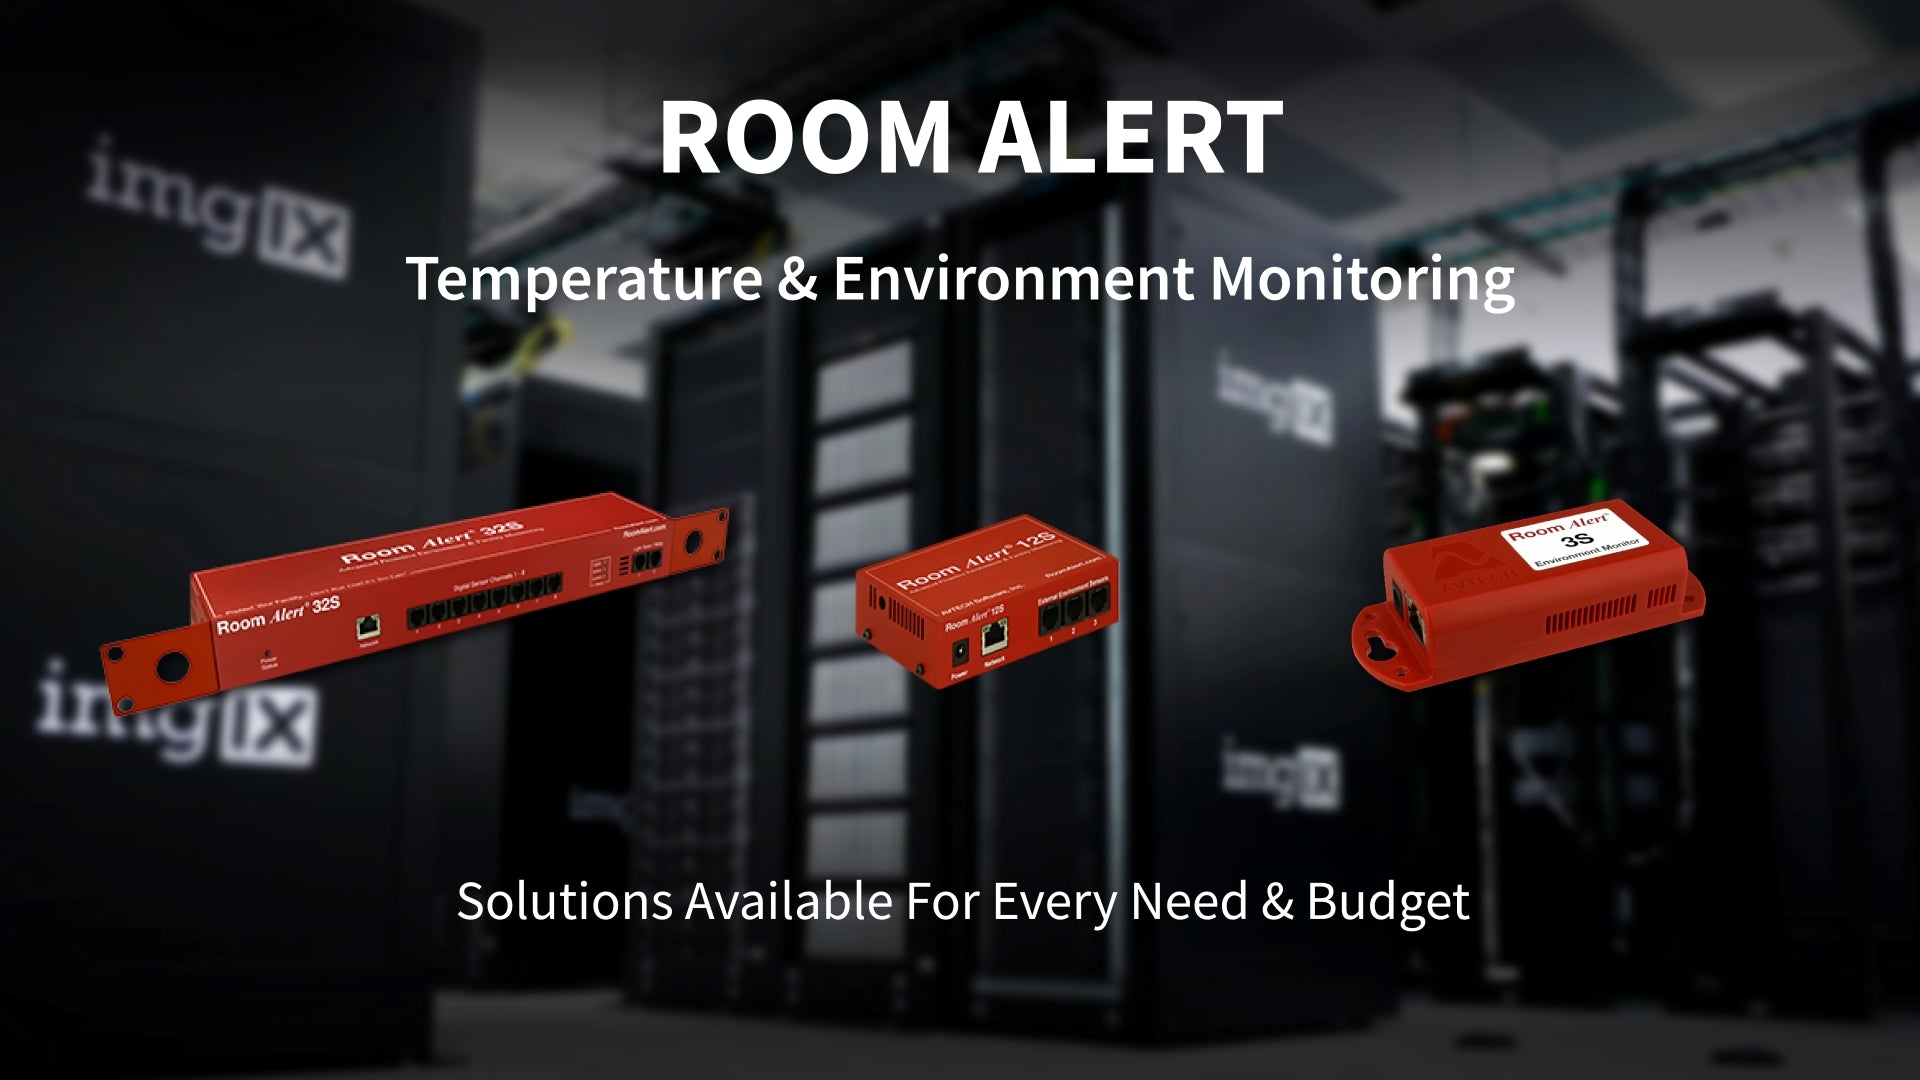 Room Alert 32E Monitor 